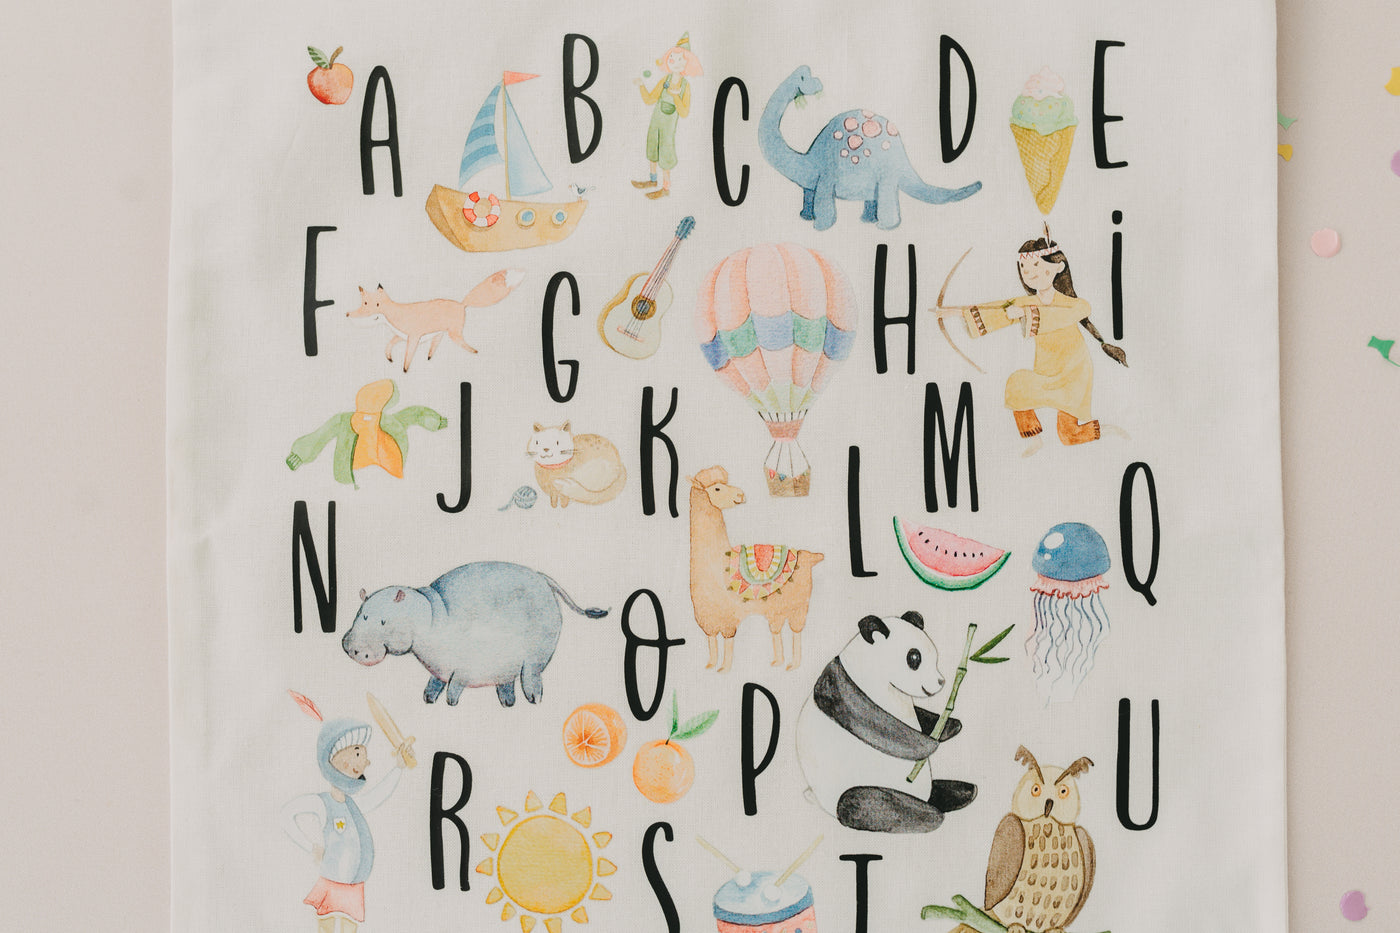 ABC Wimpel - Alphabet